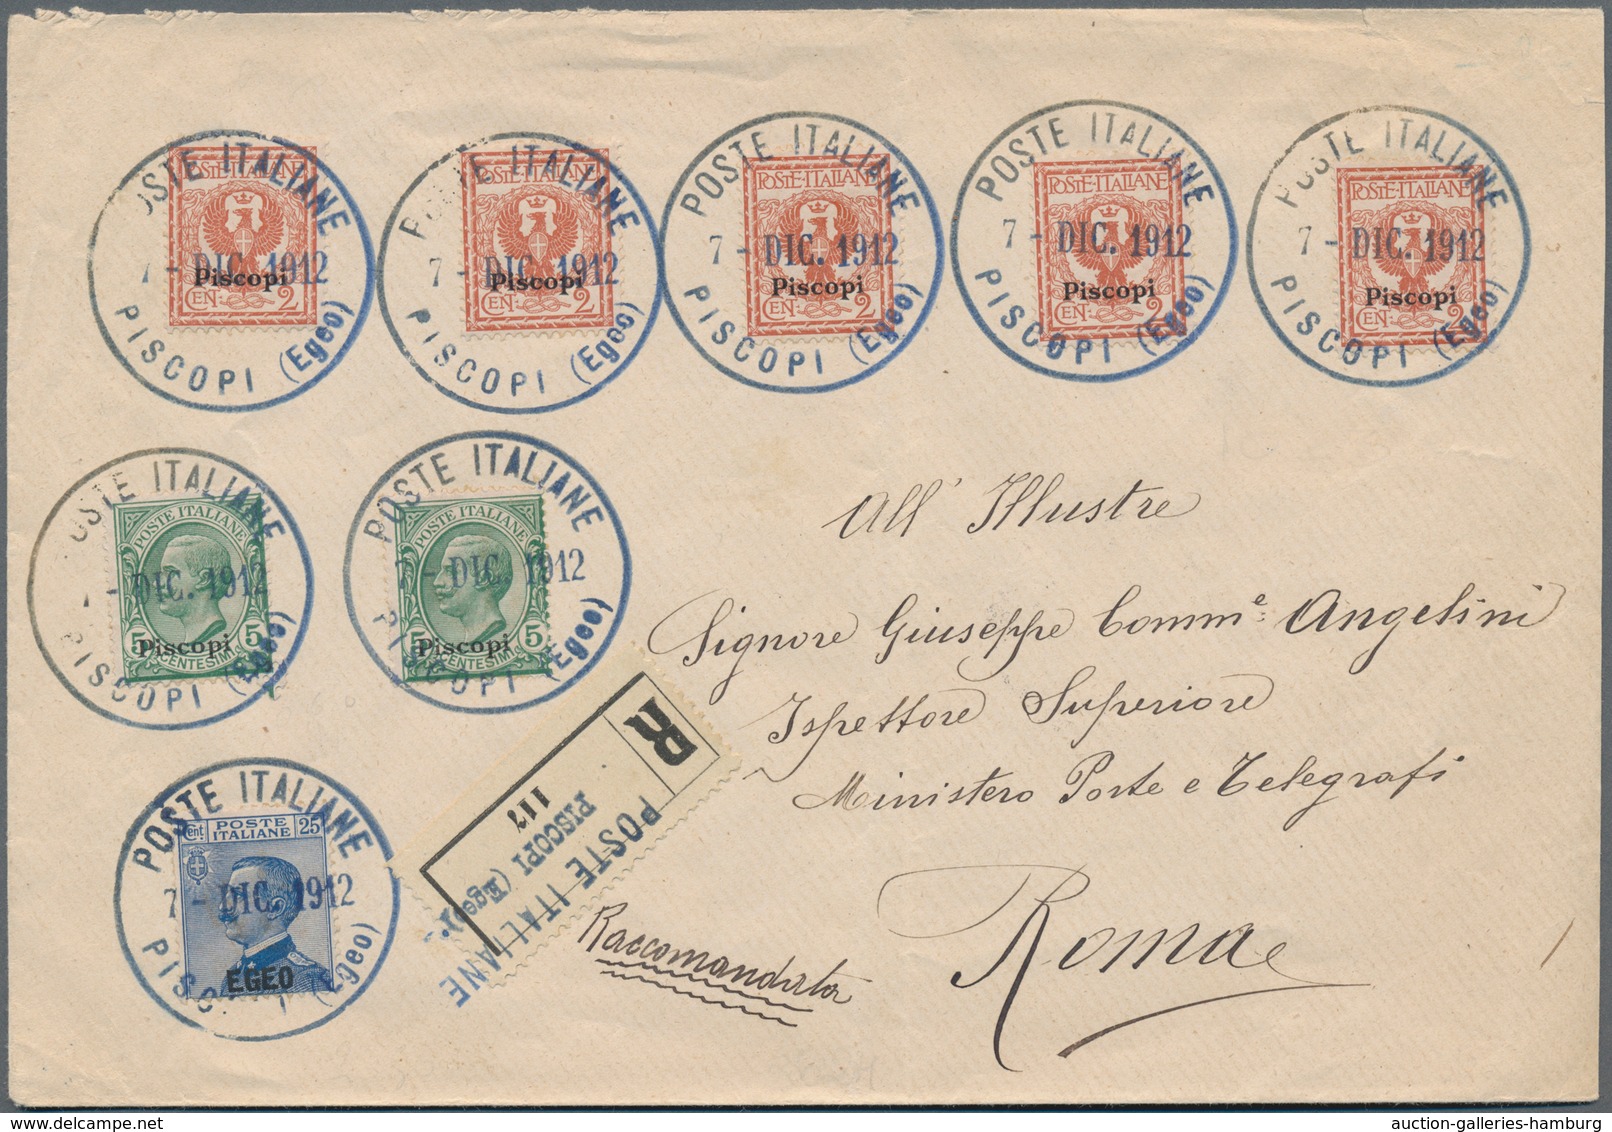 Ägäische Inseln: 1912, PISCOPI, 5 X 2 Cmi Orange Brown And 2 X 5 Cmi Green, Each With Ovp "Piscopi", - Egeo